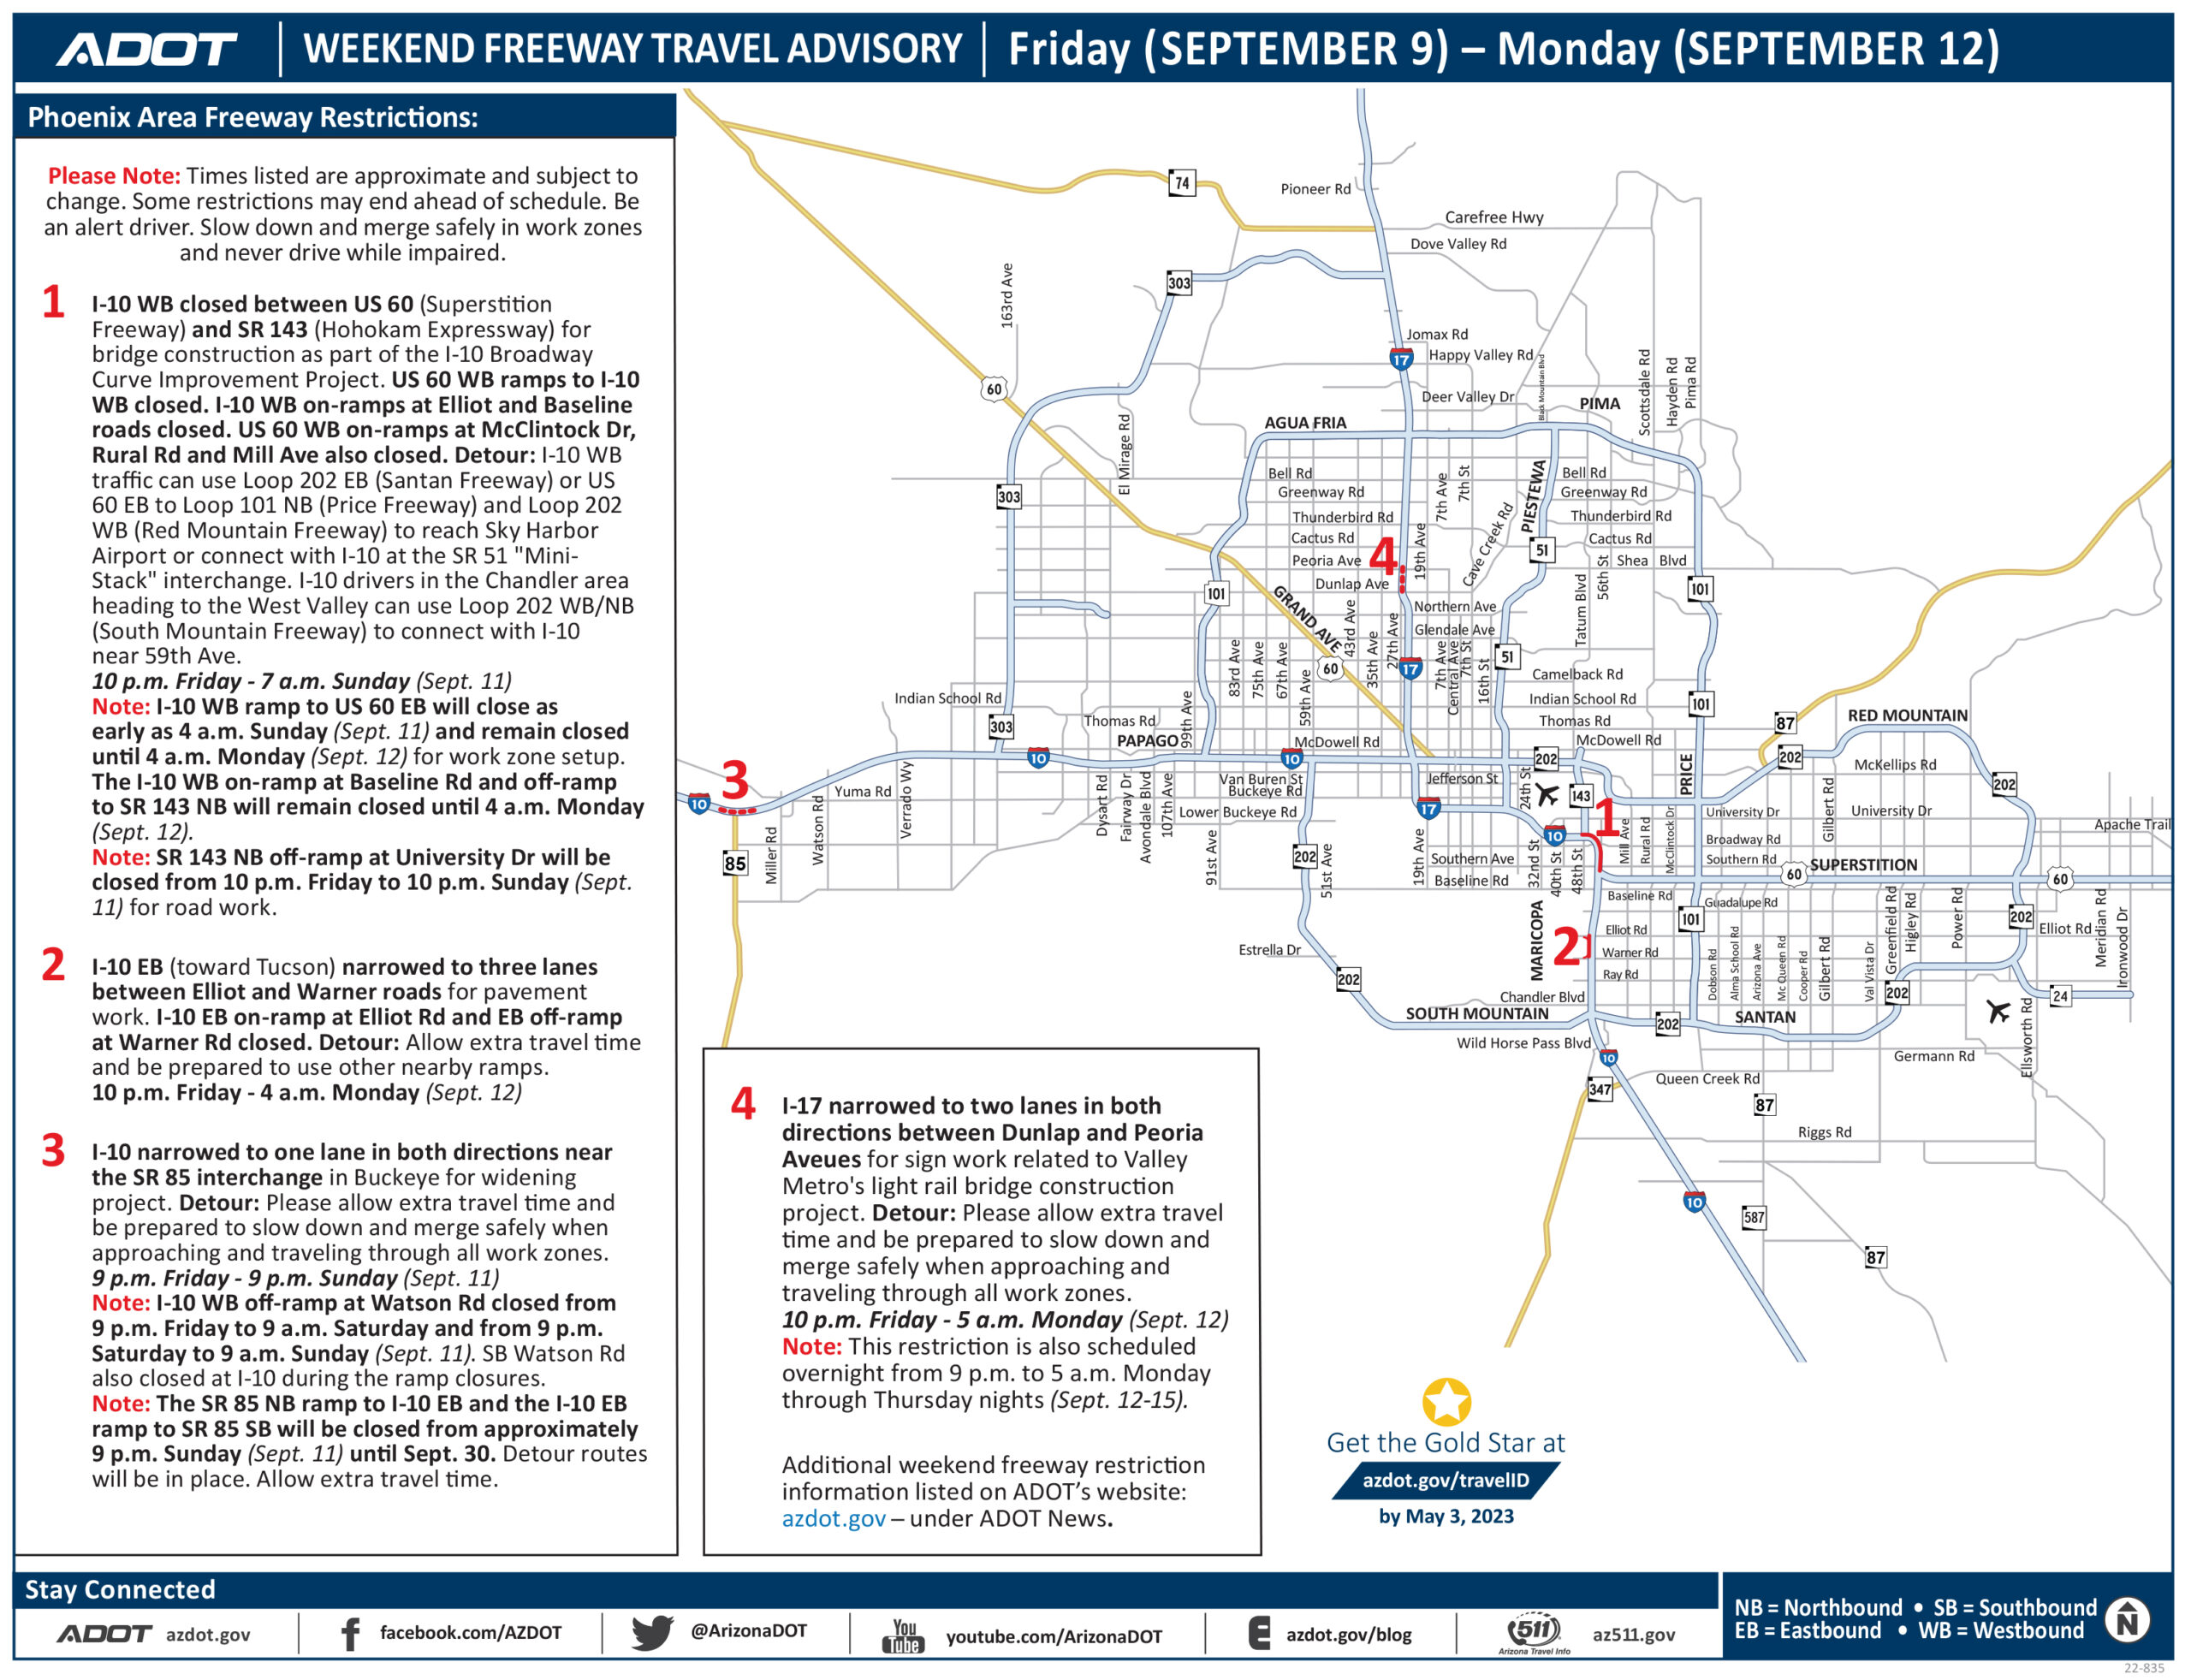 Weekend restrictions on Phoenix-area freeways, Sept. 9-12